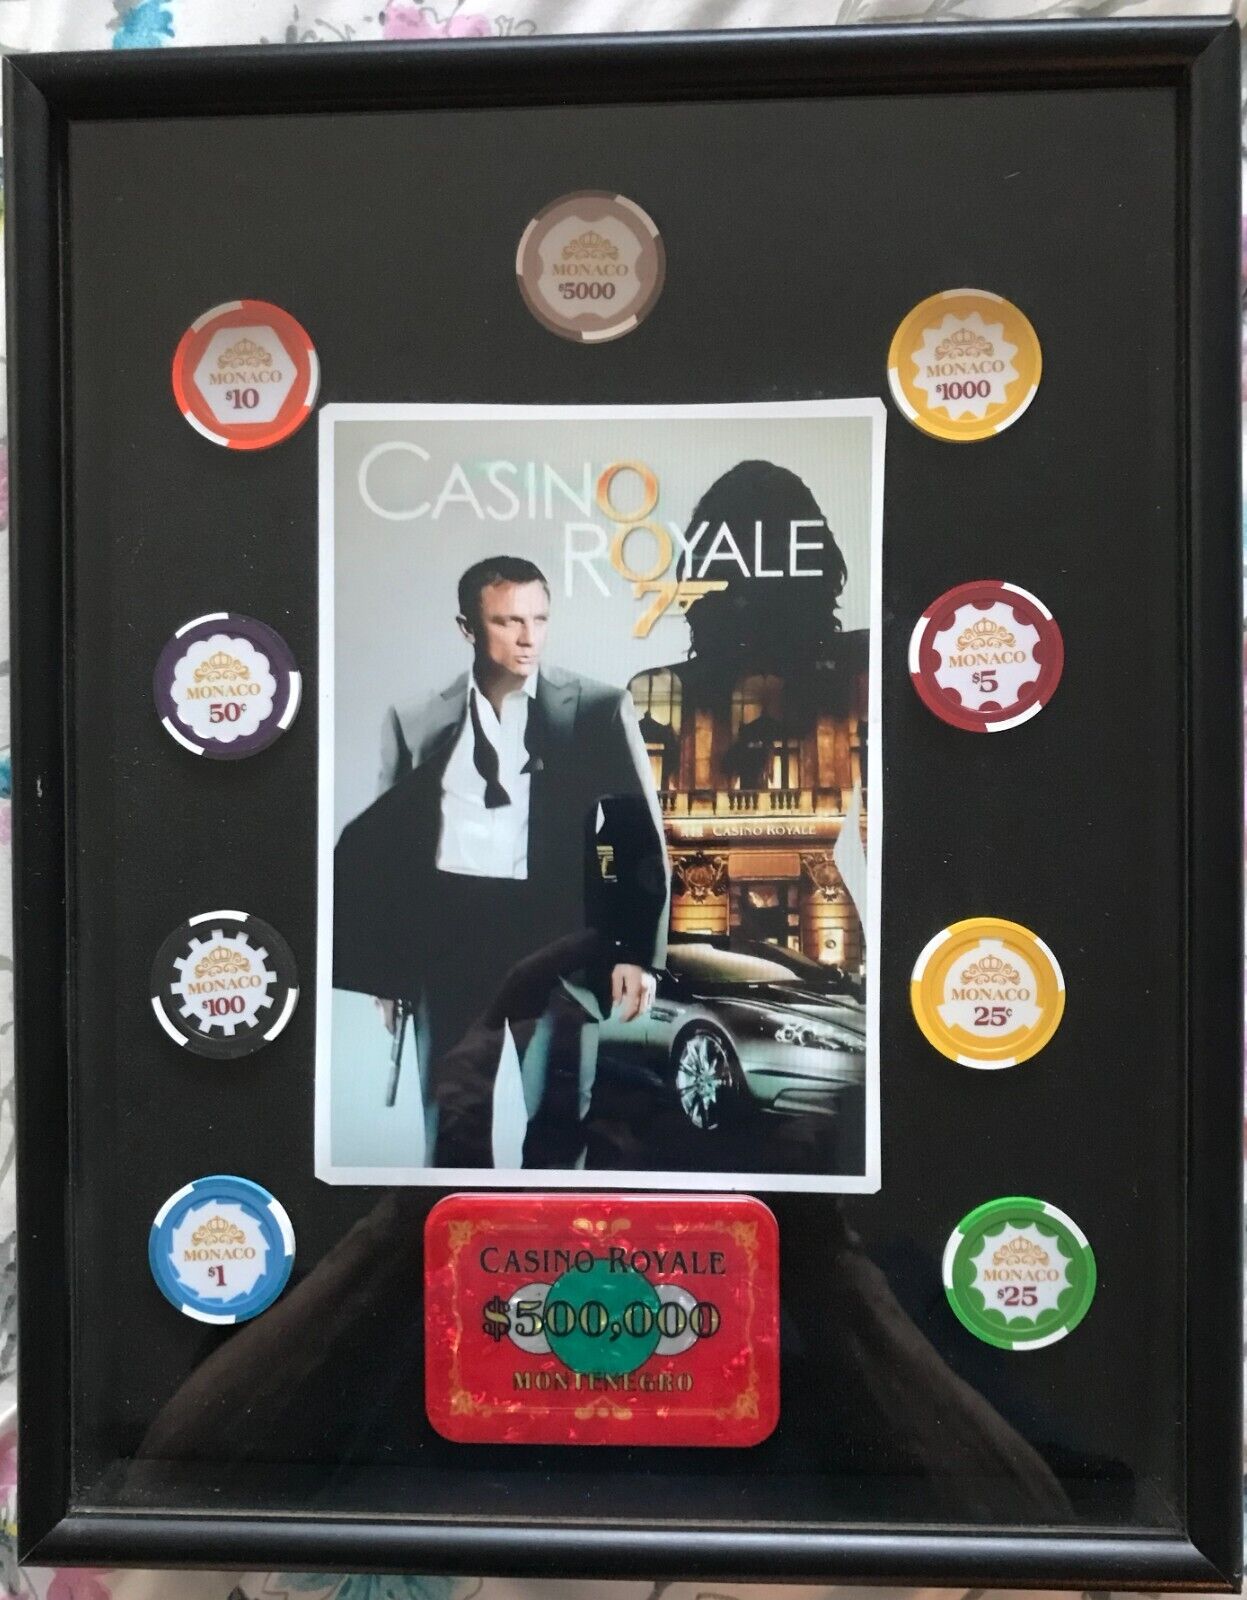 Casino Royal picture of James Bond & $500,000 poker plaque + 9 chips, box framed